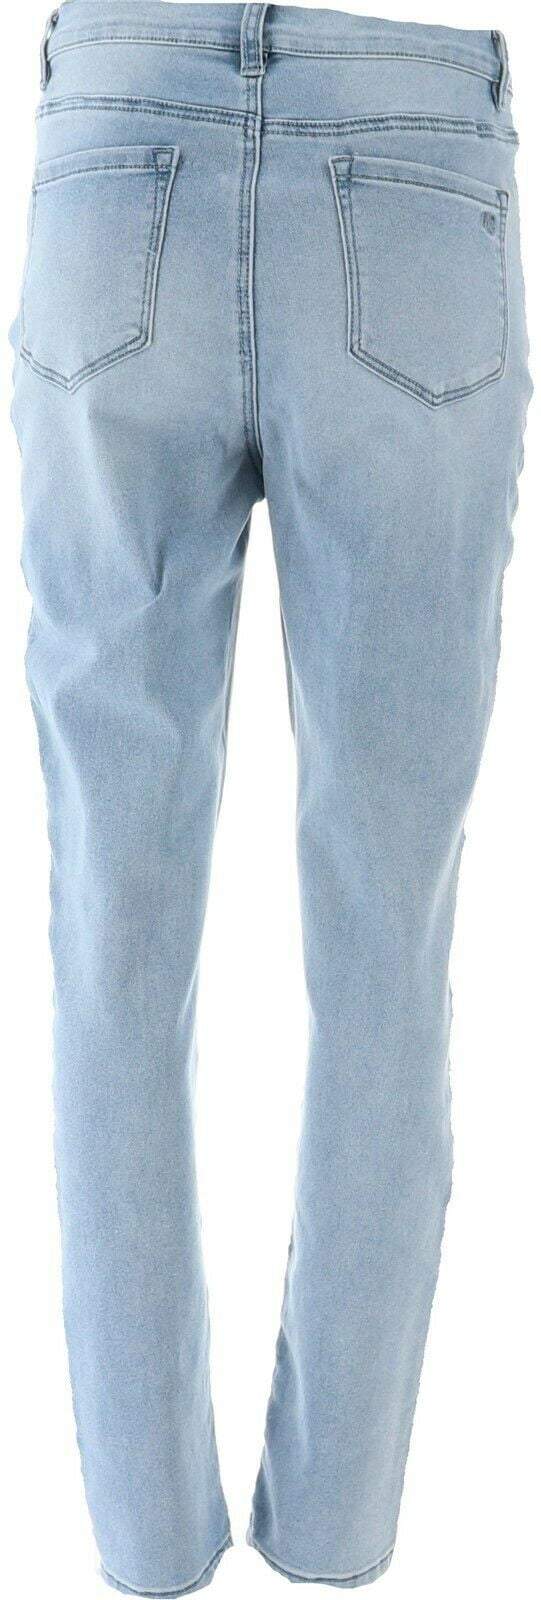 diane gilman jeans canada